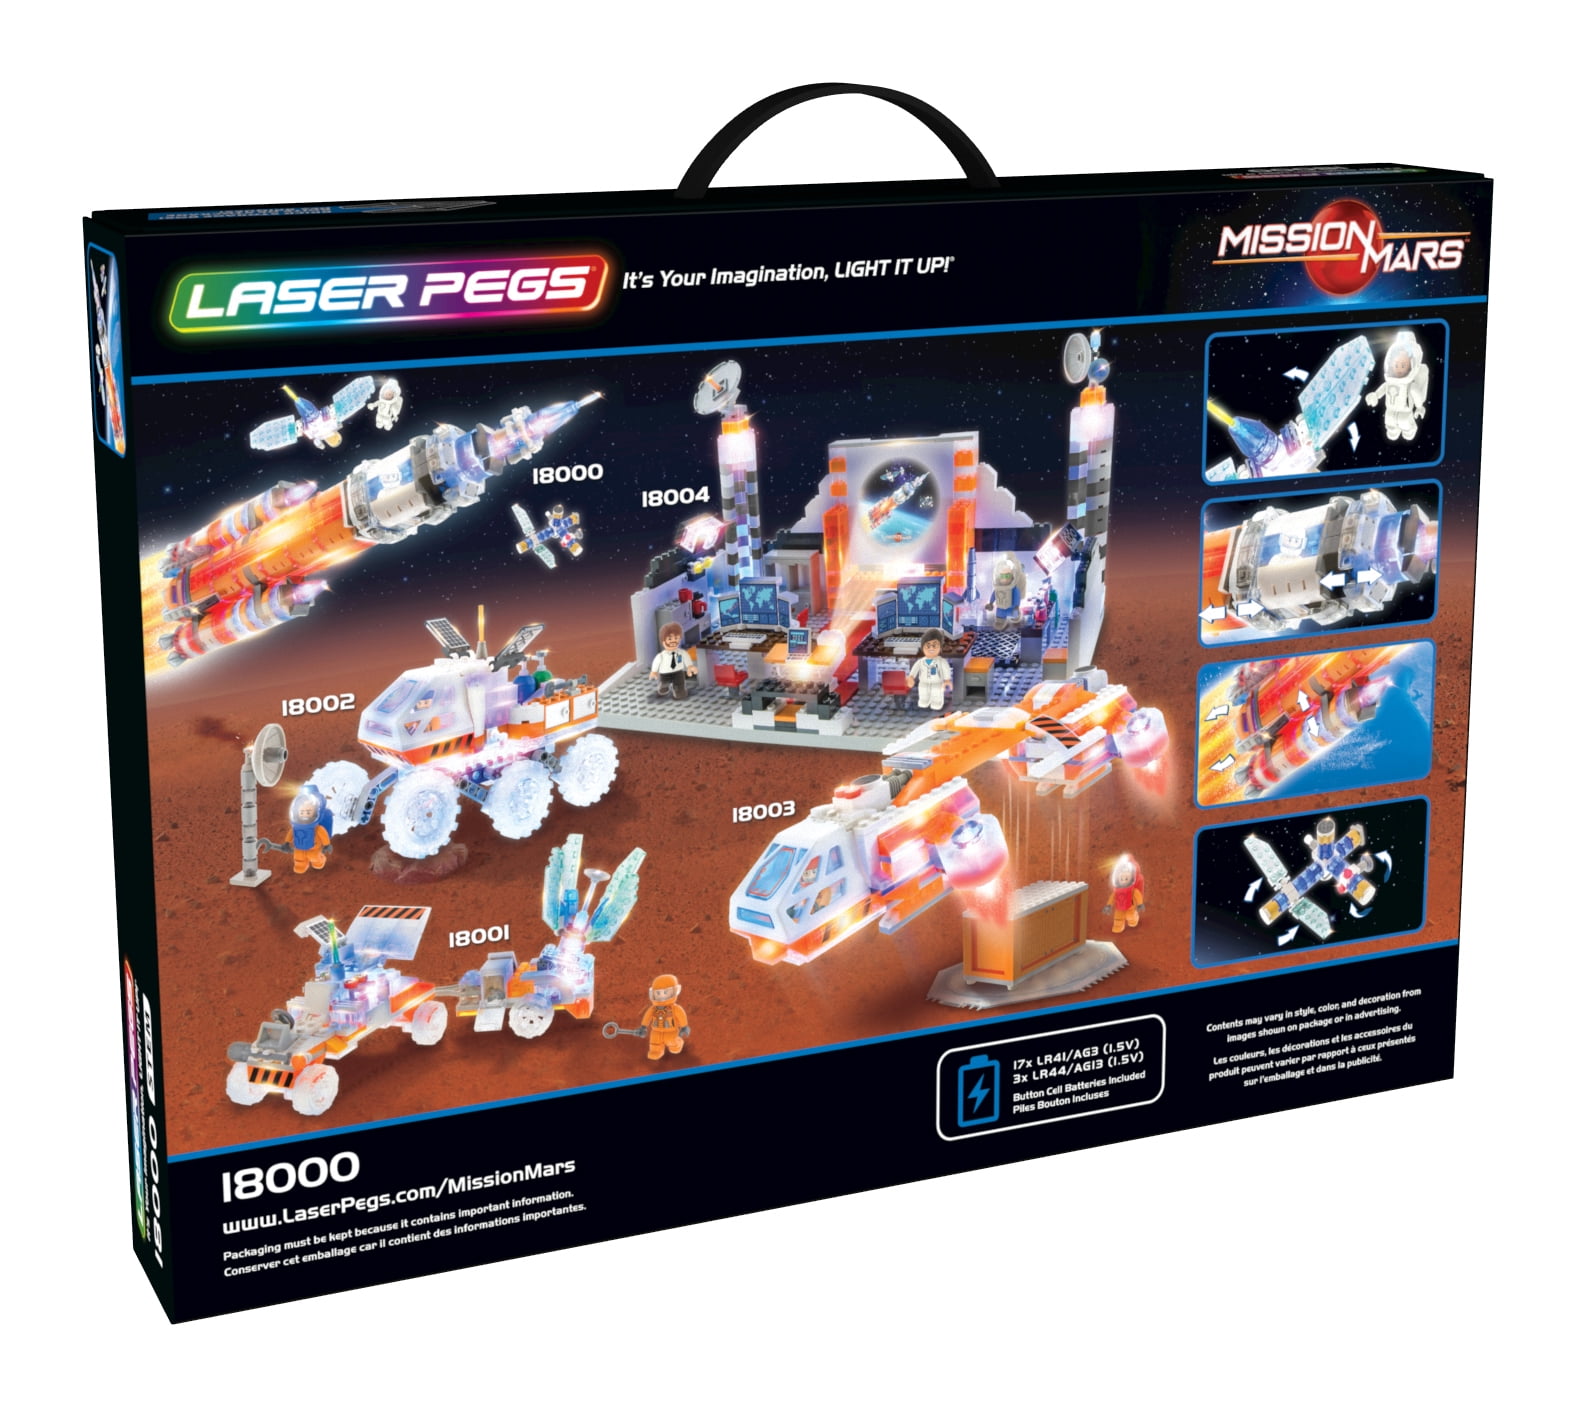 Laser Pegs LED Light-up Blocks Playset Mission Mars Rover 200 Pcs 18002 NRFP for sale online 